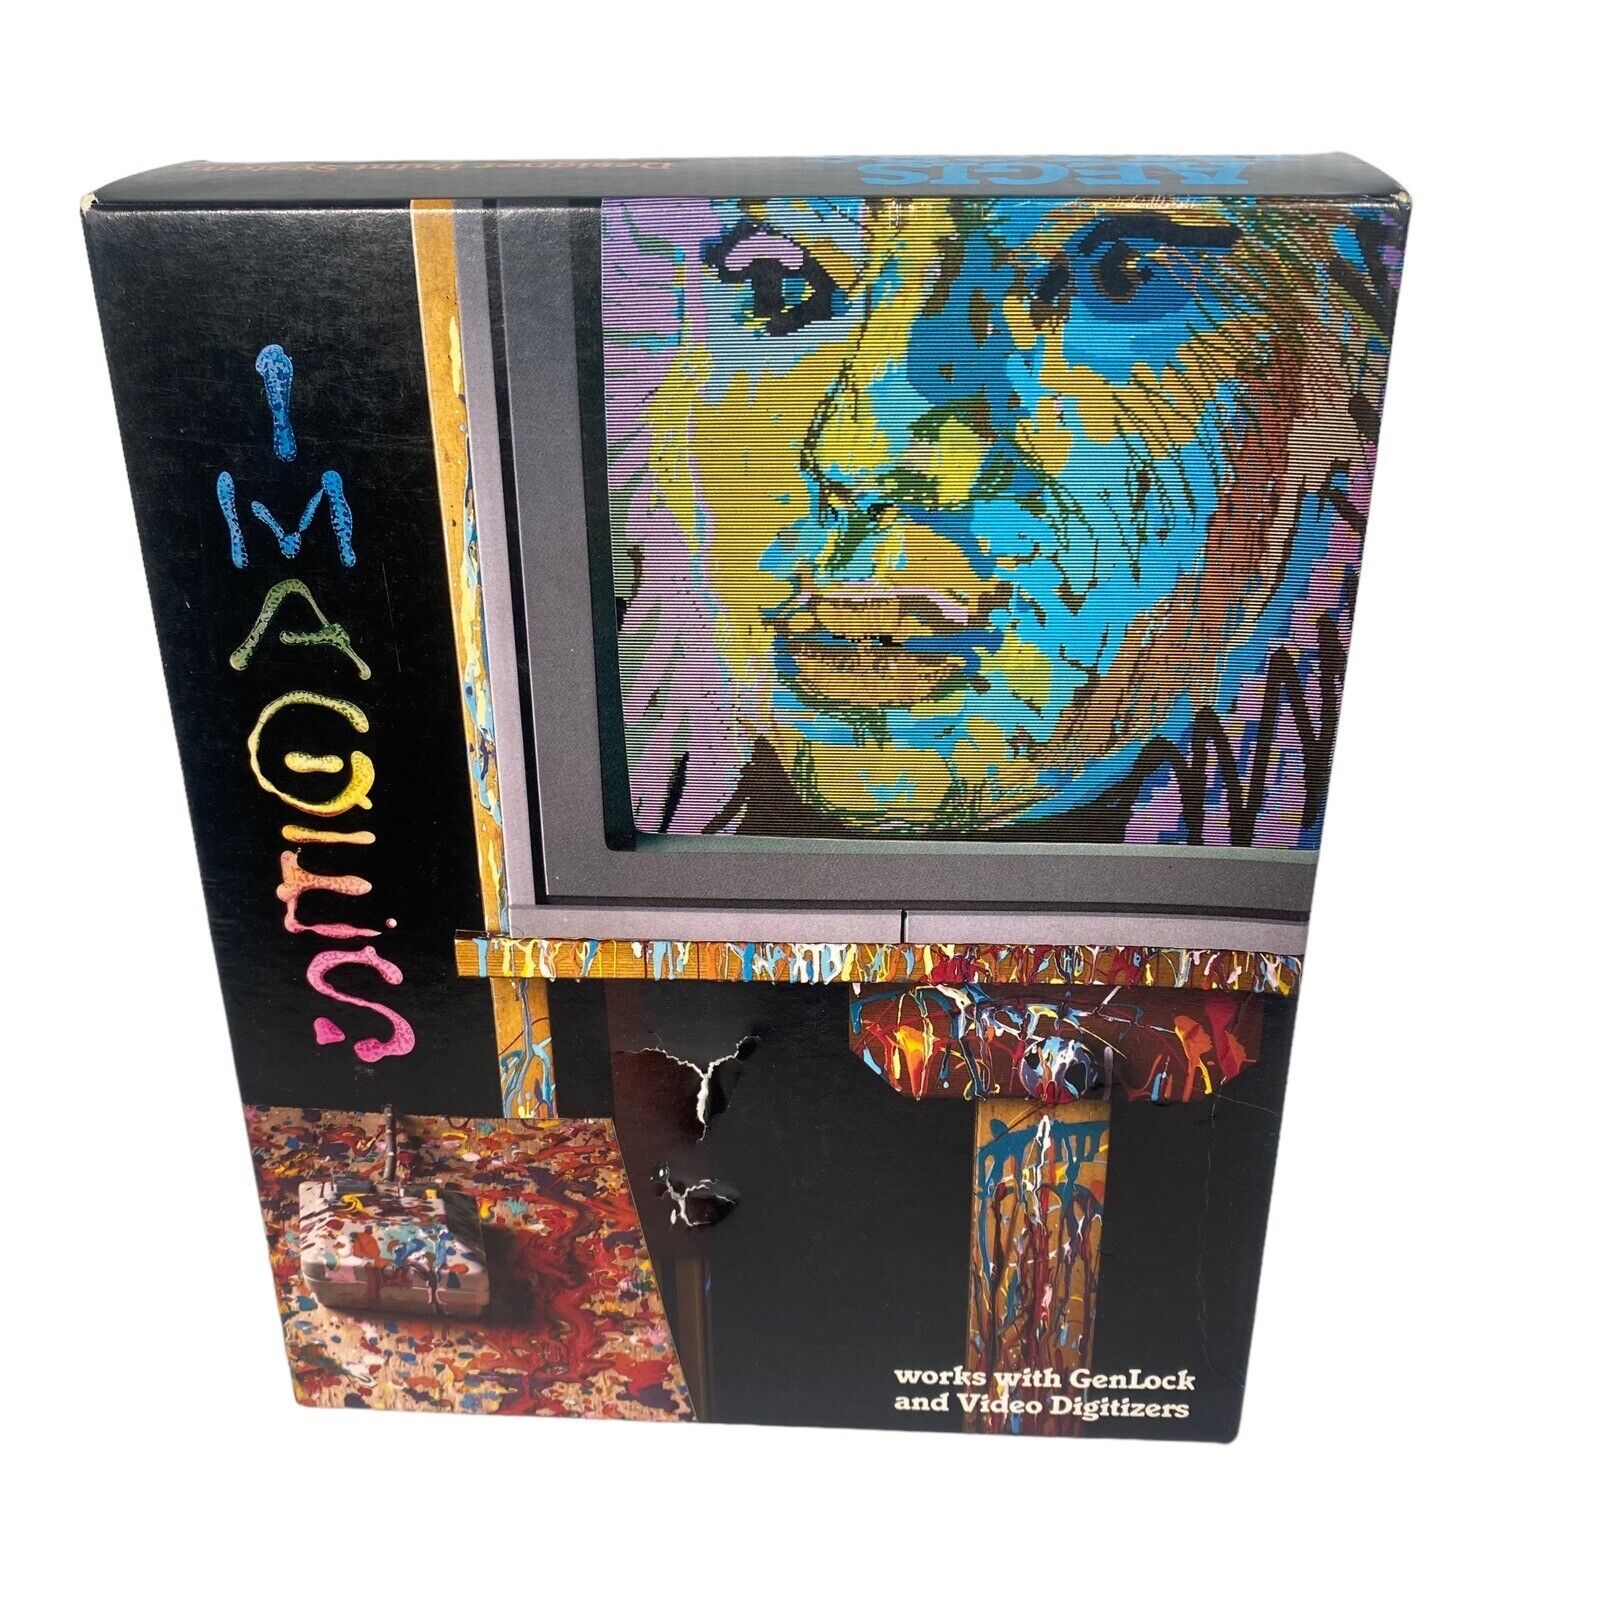 Aegis Images Designer Paint Systems - VTG 80s Amiga Computer Software For Art